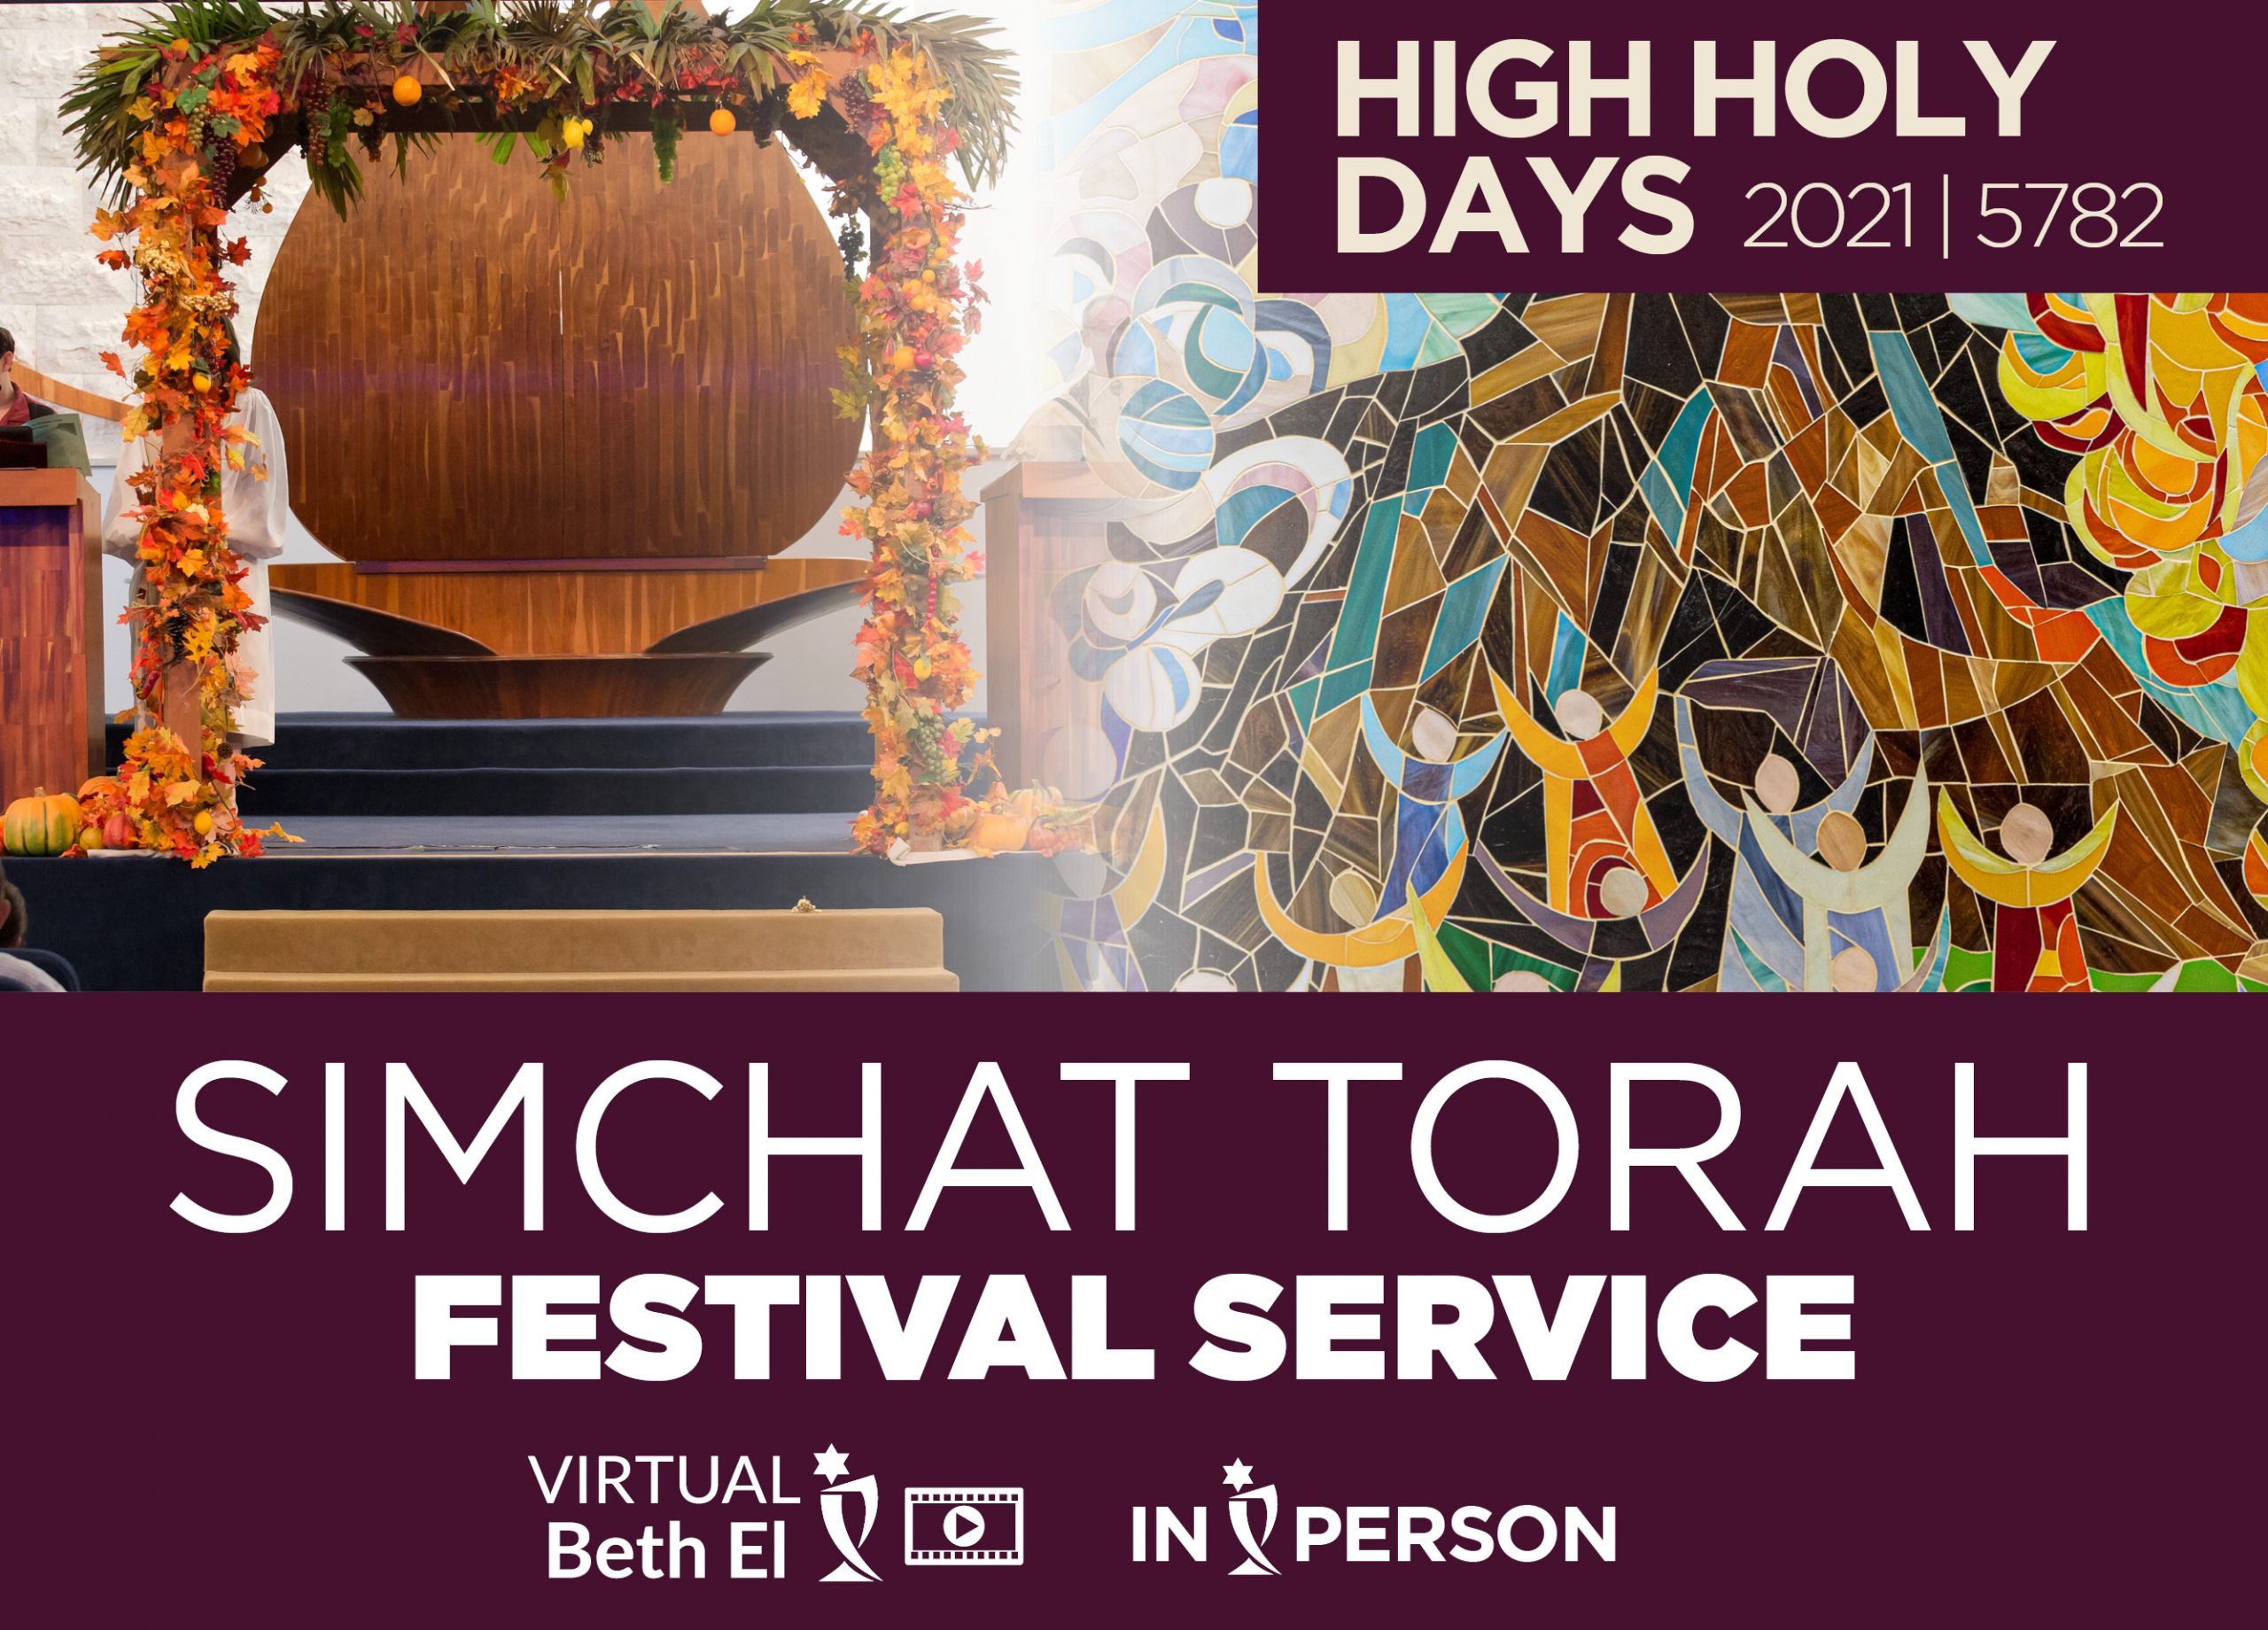 Simchat Torah Festival Service event graphic for Temple Beth El of Boca Raton